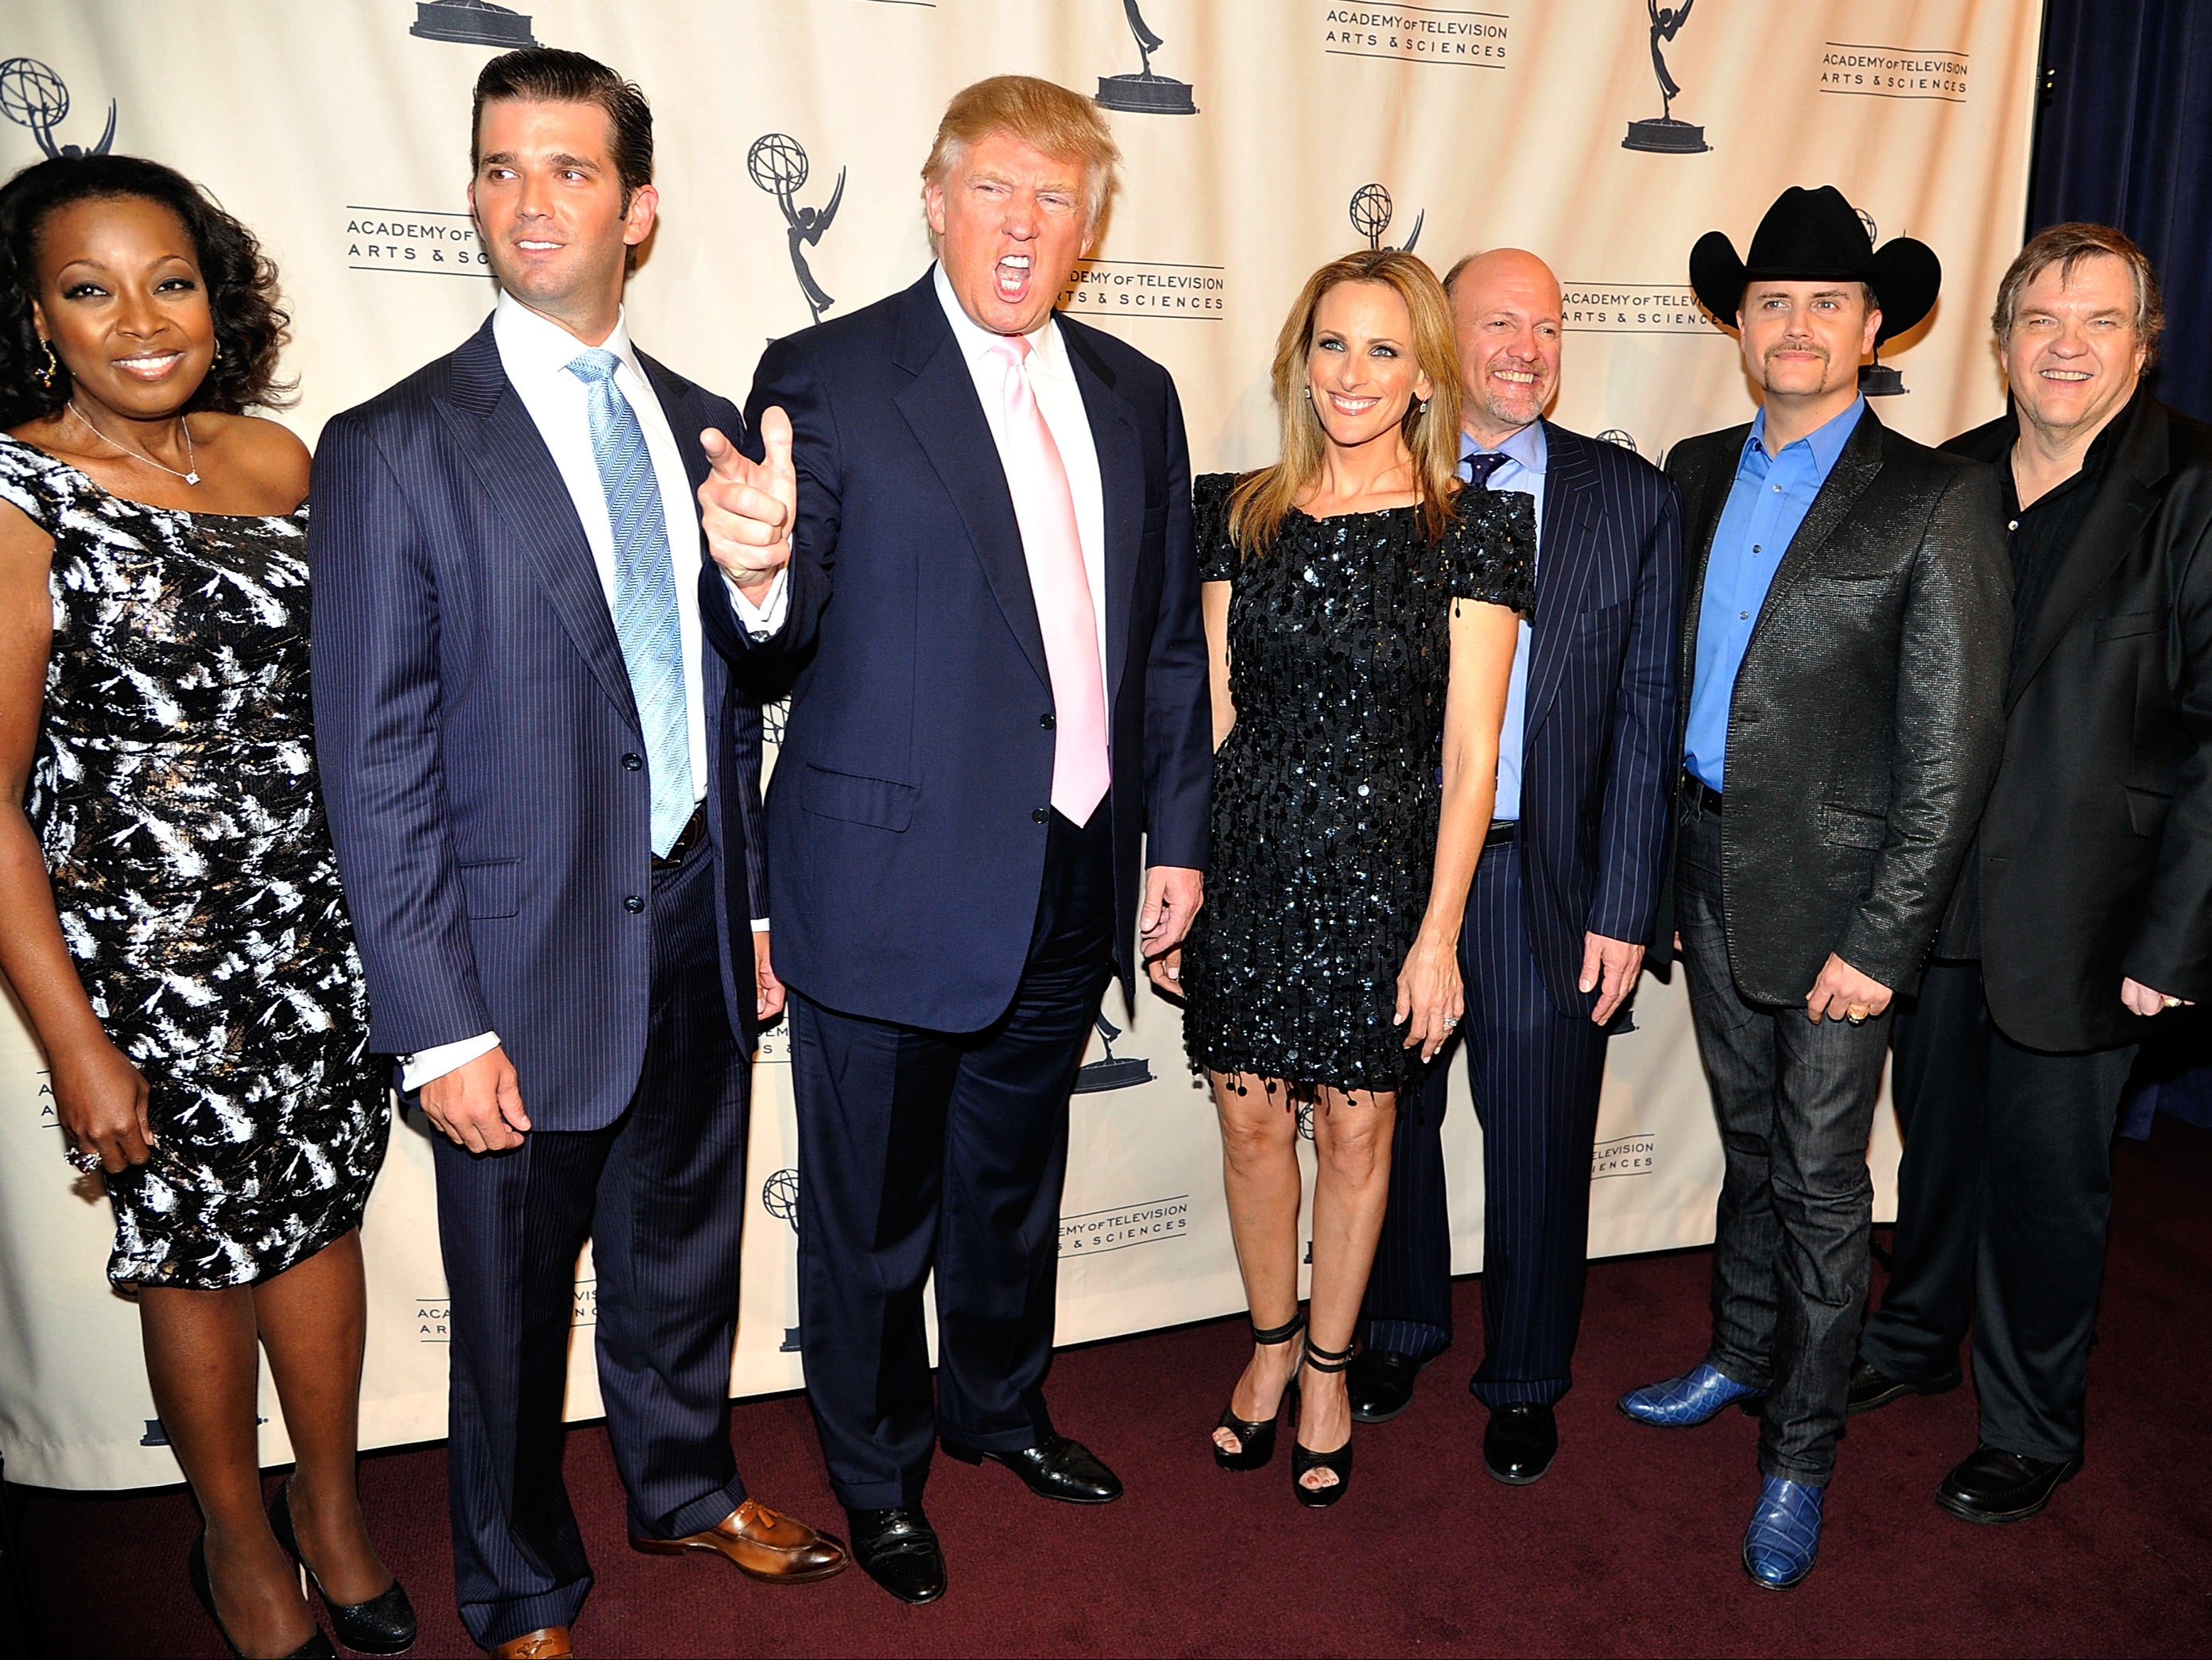 Star Jones, Donald Trump Jr, Donald Trump, Marlee Matlin, Jim Cramer, John Rich, and Meat Loaf attend a ‘Celebrity Apprentice’ event on 26 April 2011 in New York City